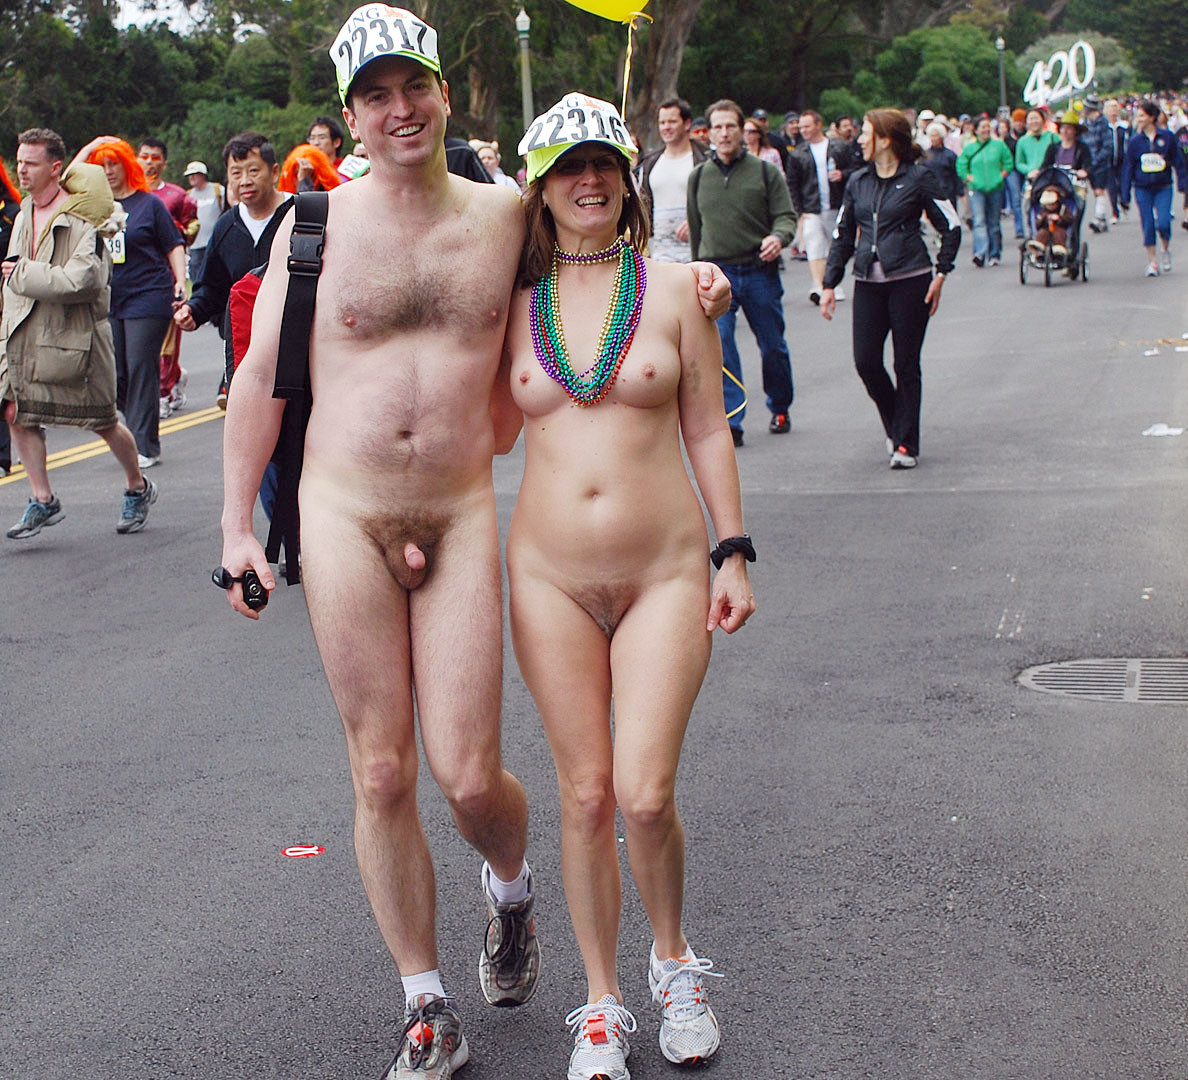 https://www.nudismlife.com/galleries/nudists_and_nude/nudists_couple/nudists_nude_naturists_couple_0561.jpg